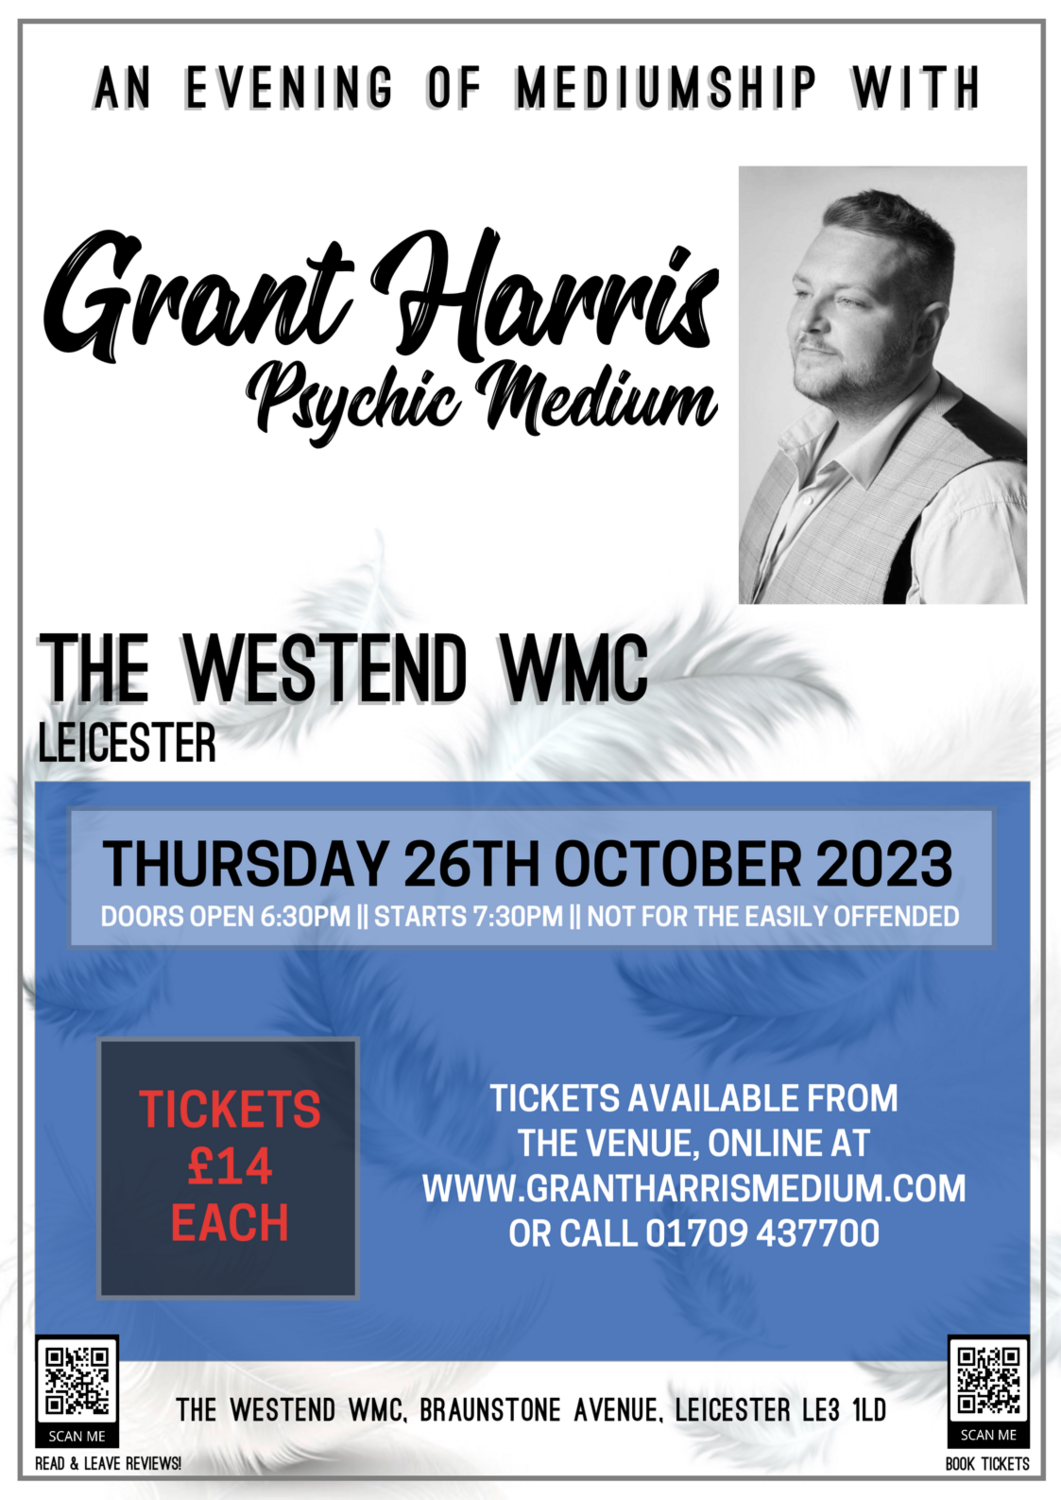 The Westend WMC, Leicester, Thursday 26th October 2023